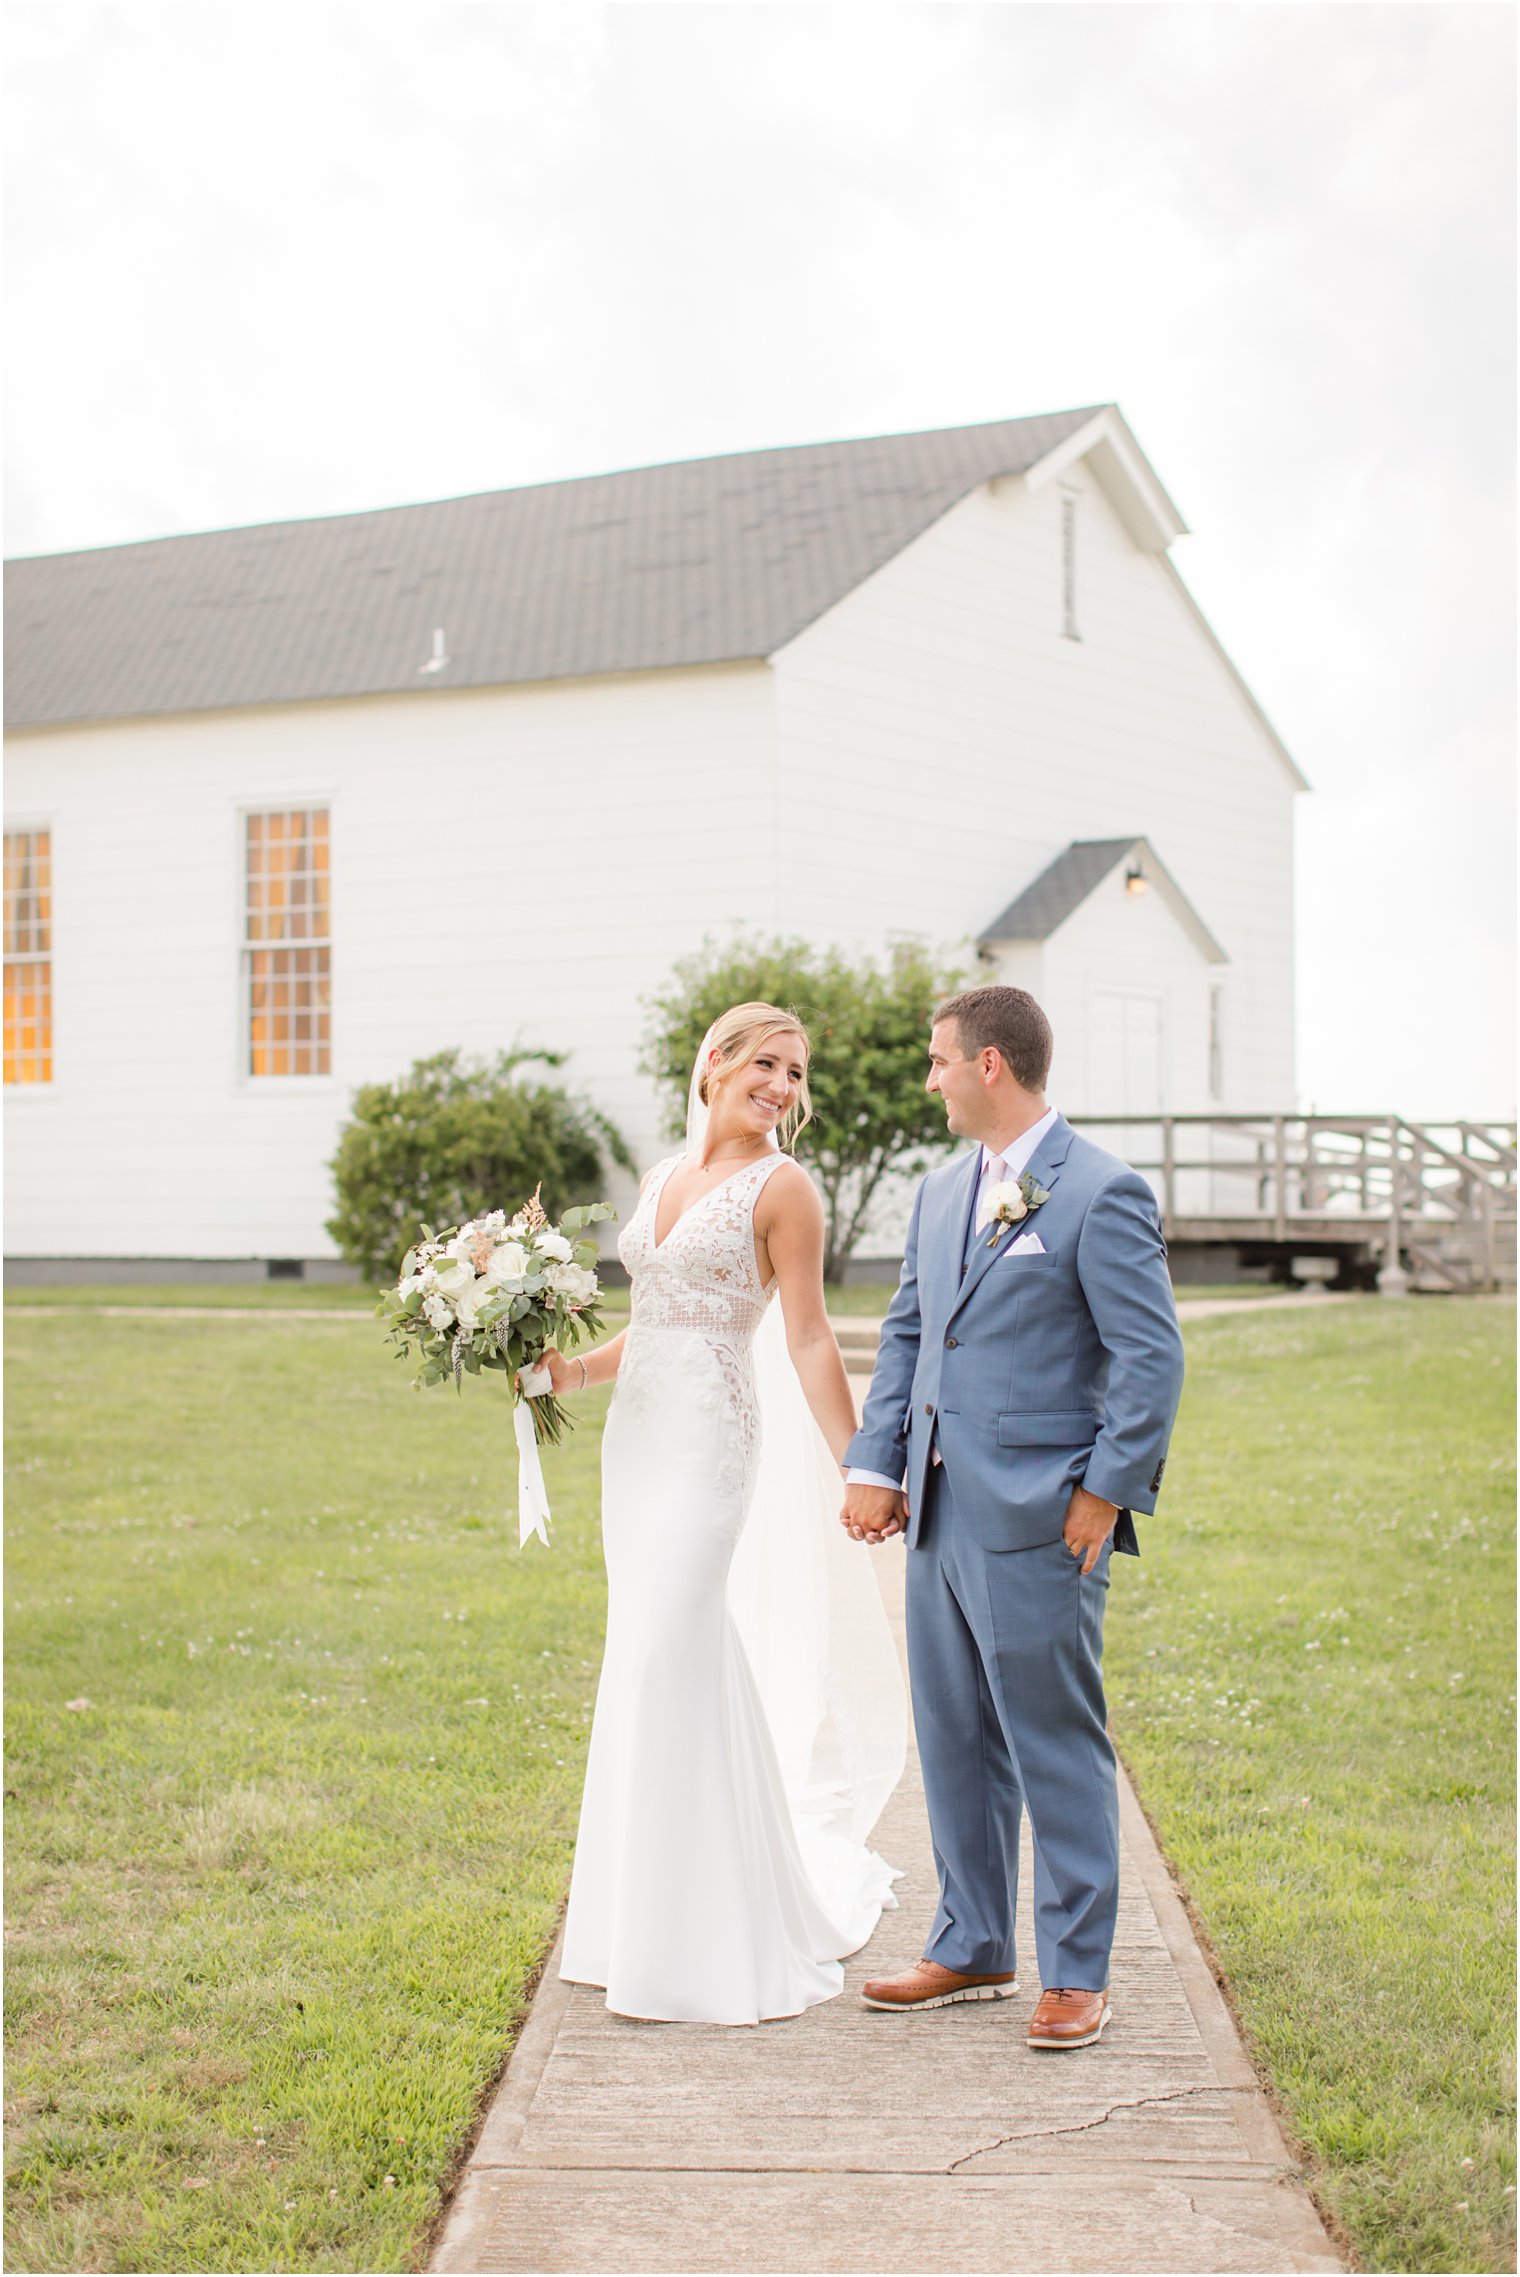 Summer wedding portraits at Sandy Hook Chapel by NJ photographer Idalia Photography